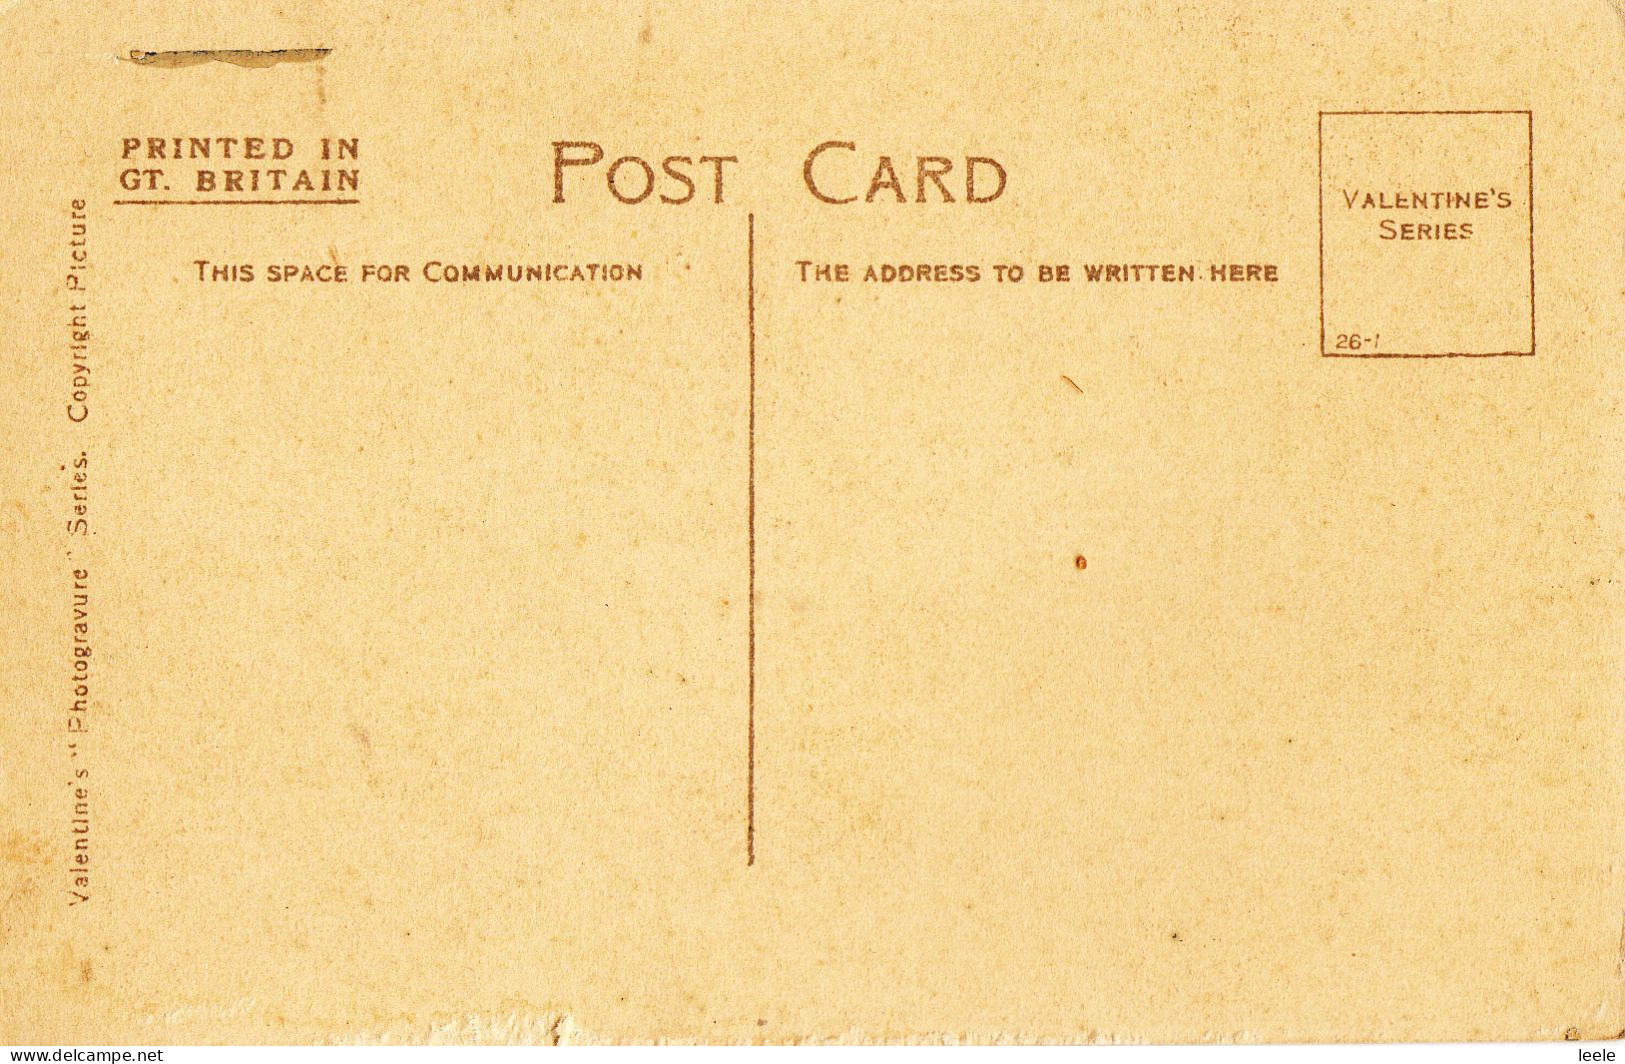 BY88. Vintage Postcard. Tam O'Shanter And Souter Johnny. Robert Burns - Ayrshire